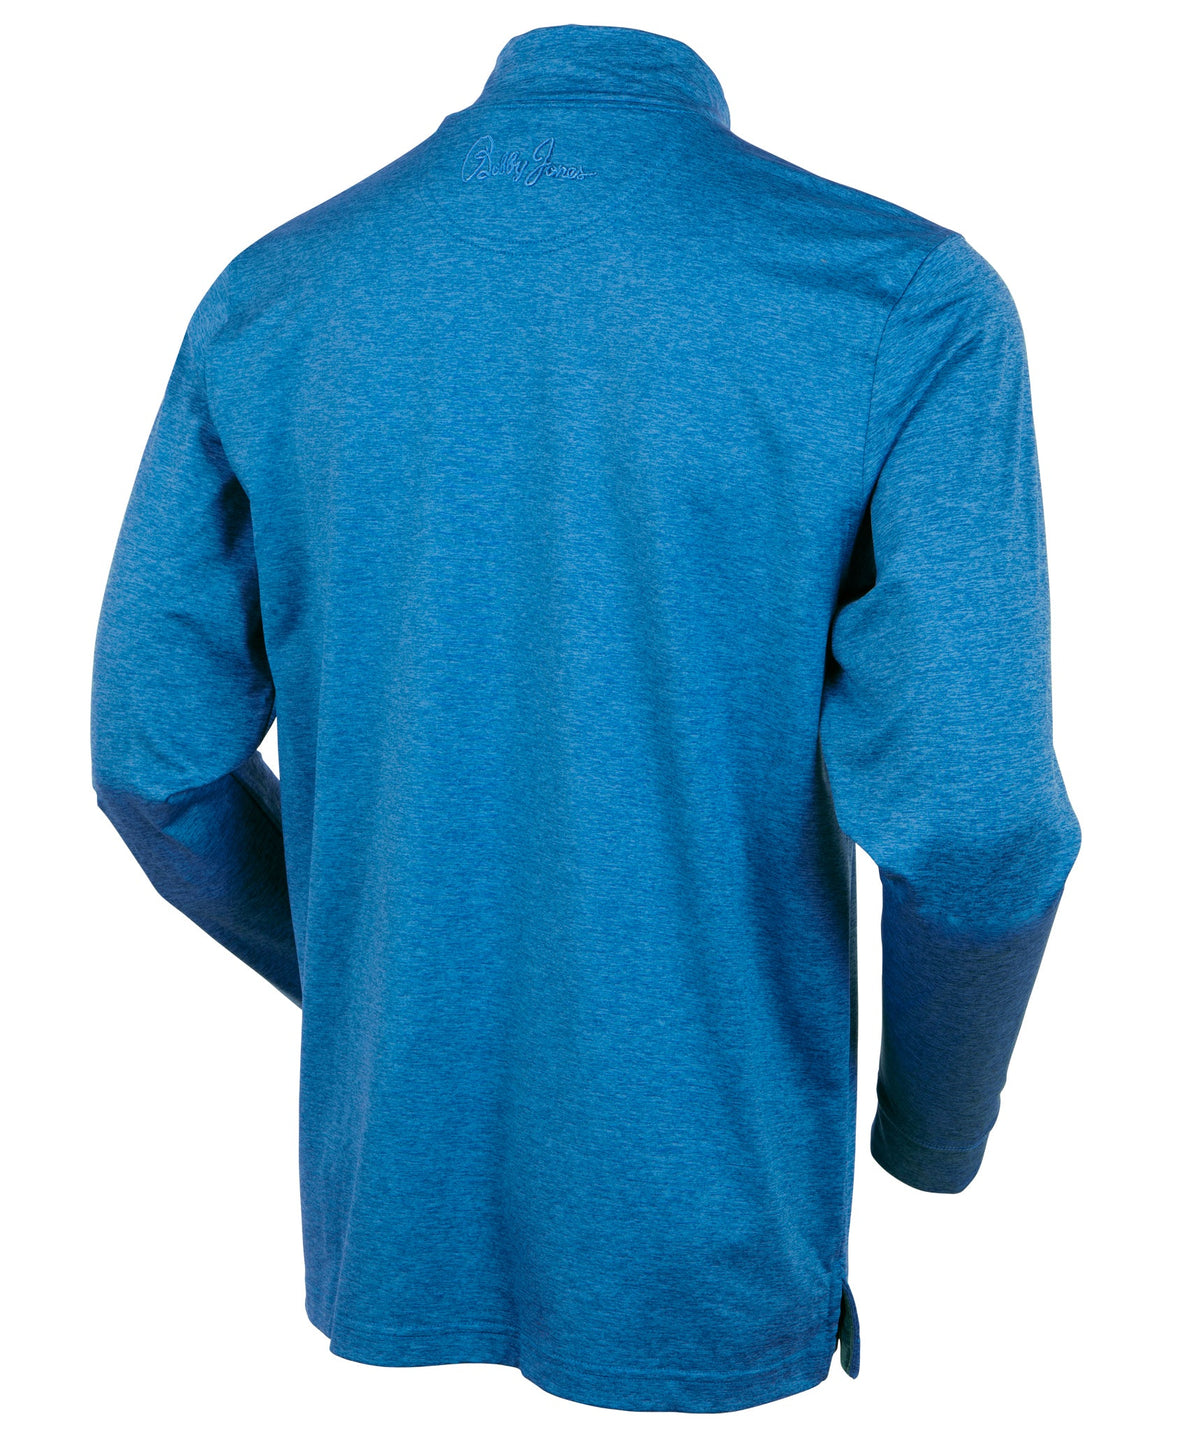 Performance Brushed-Back Stretch Jersey Mock Neck Shirt